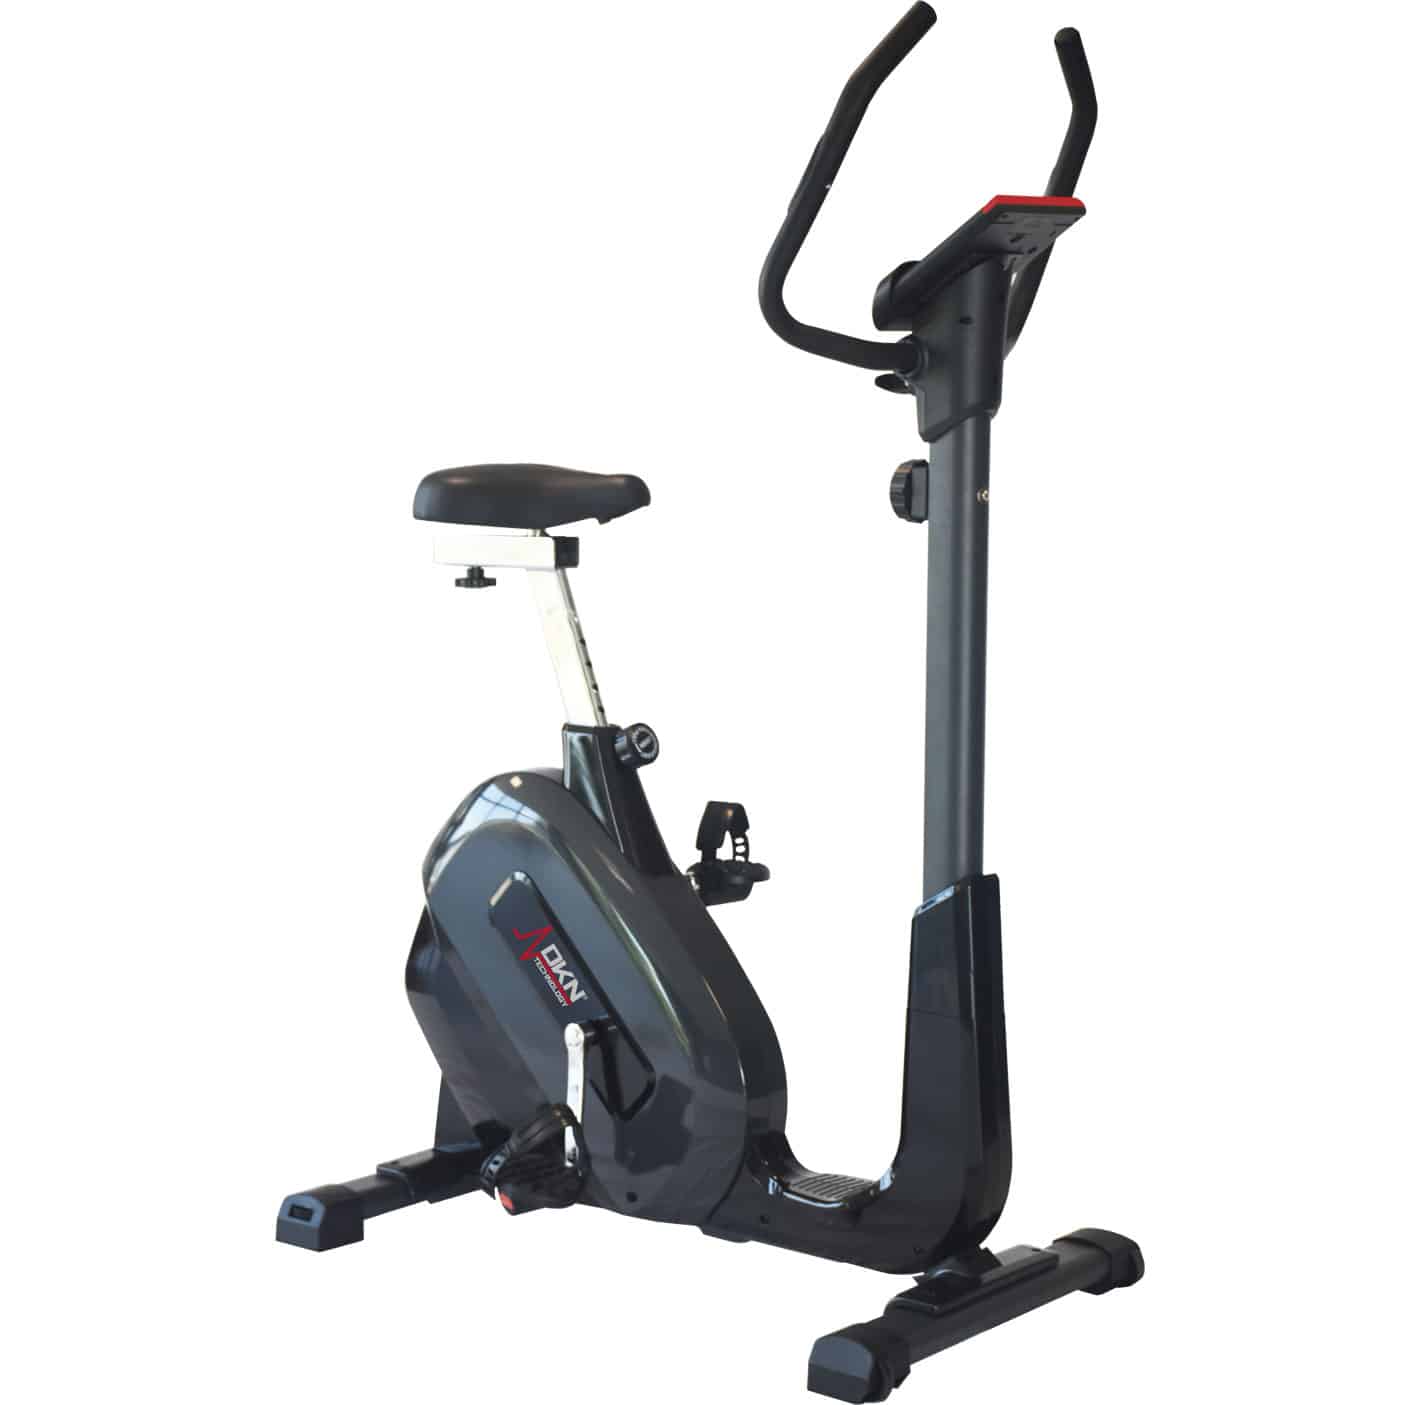 m-470 exercise bike for seniors | Hometrainer fiets voor senioren